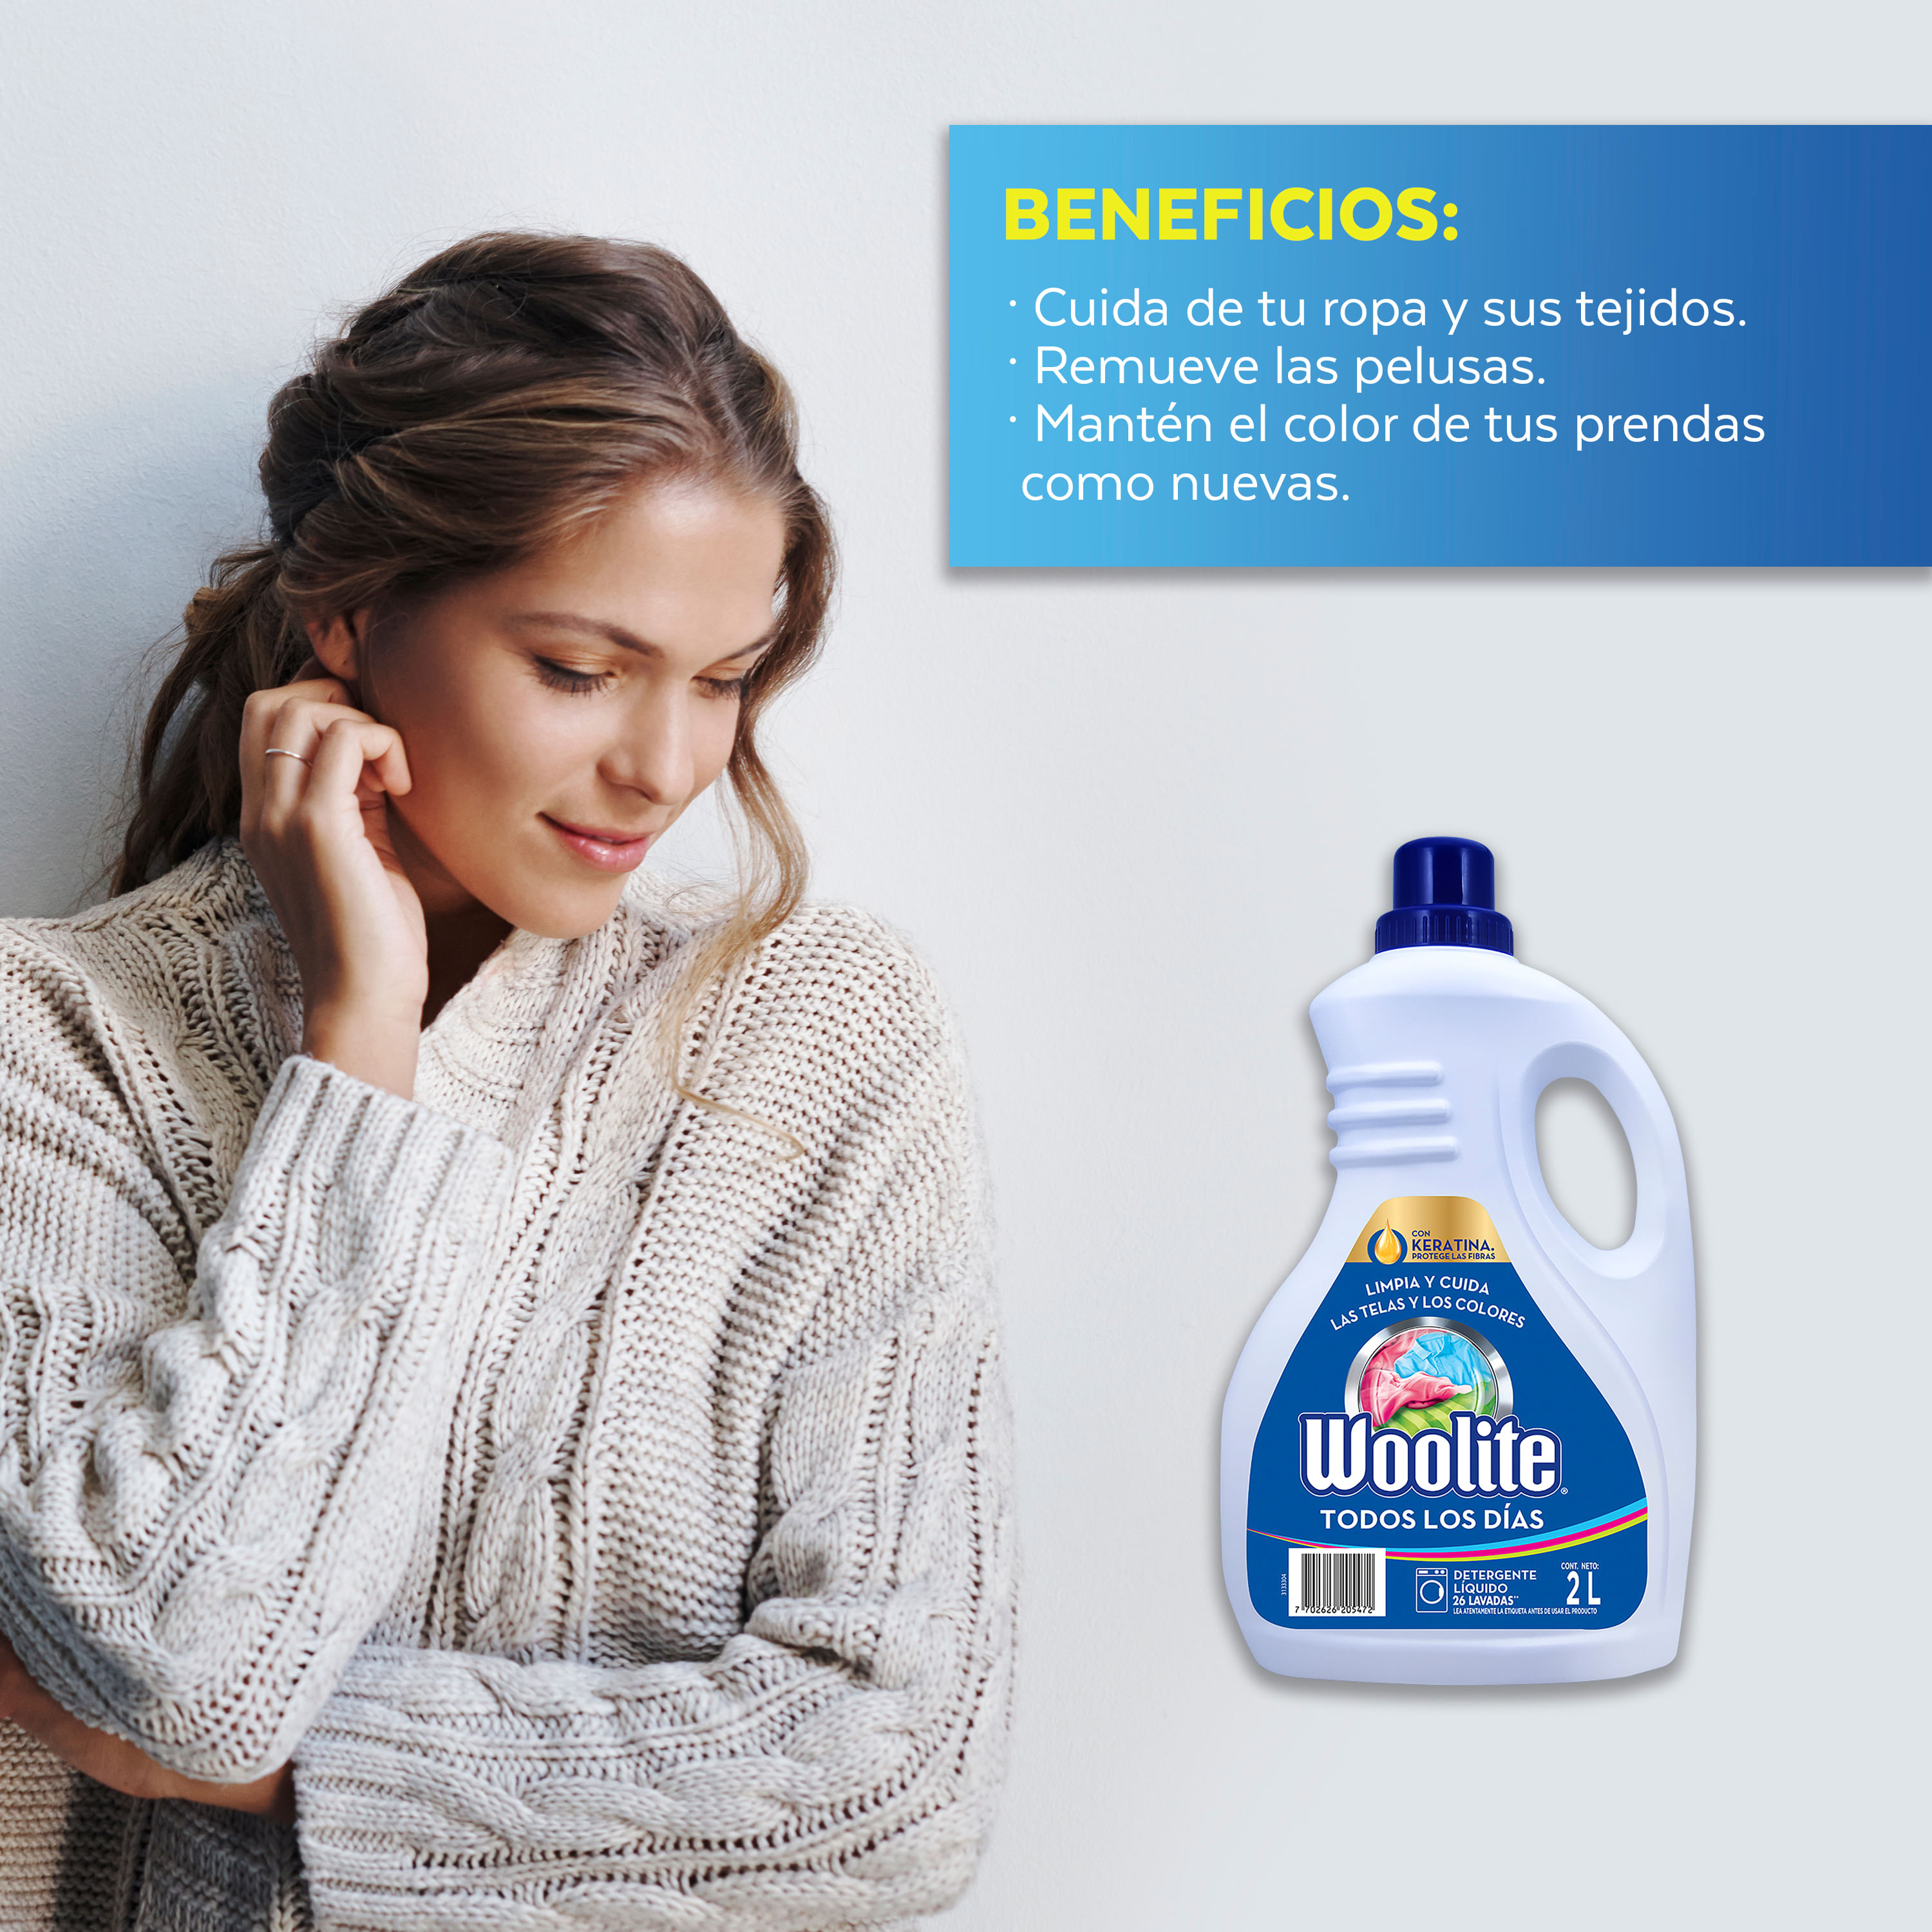 Comprar Detergente Woolite todos días - 2Lt | Walmart Guatemala